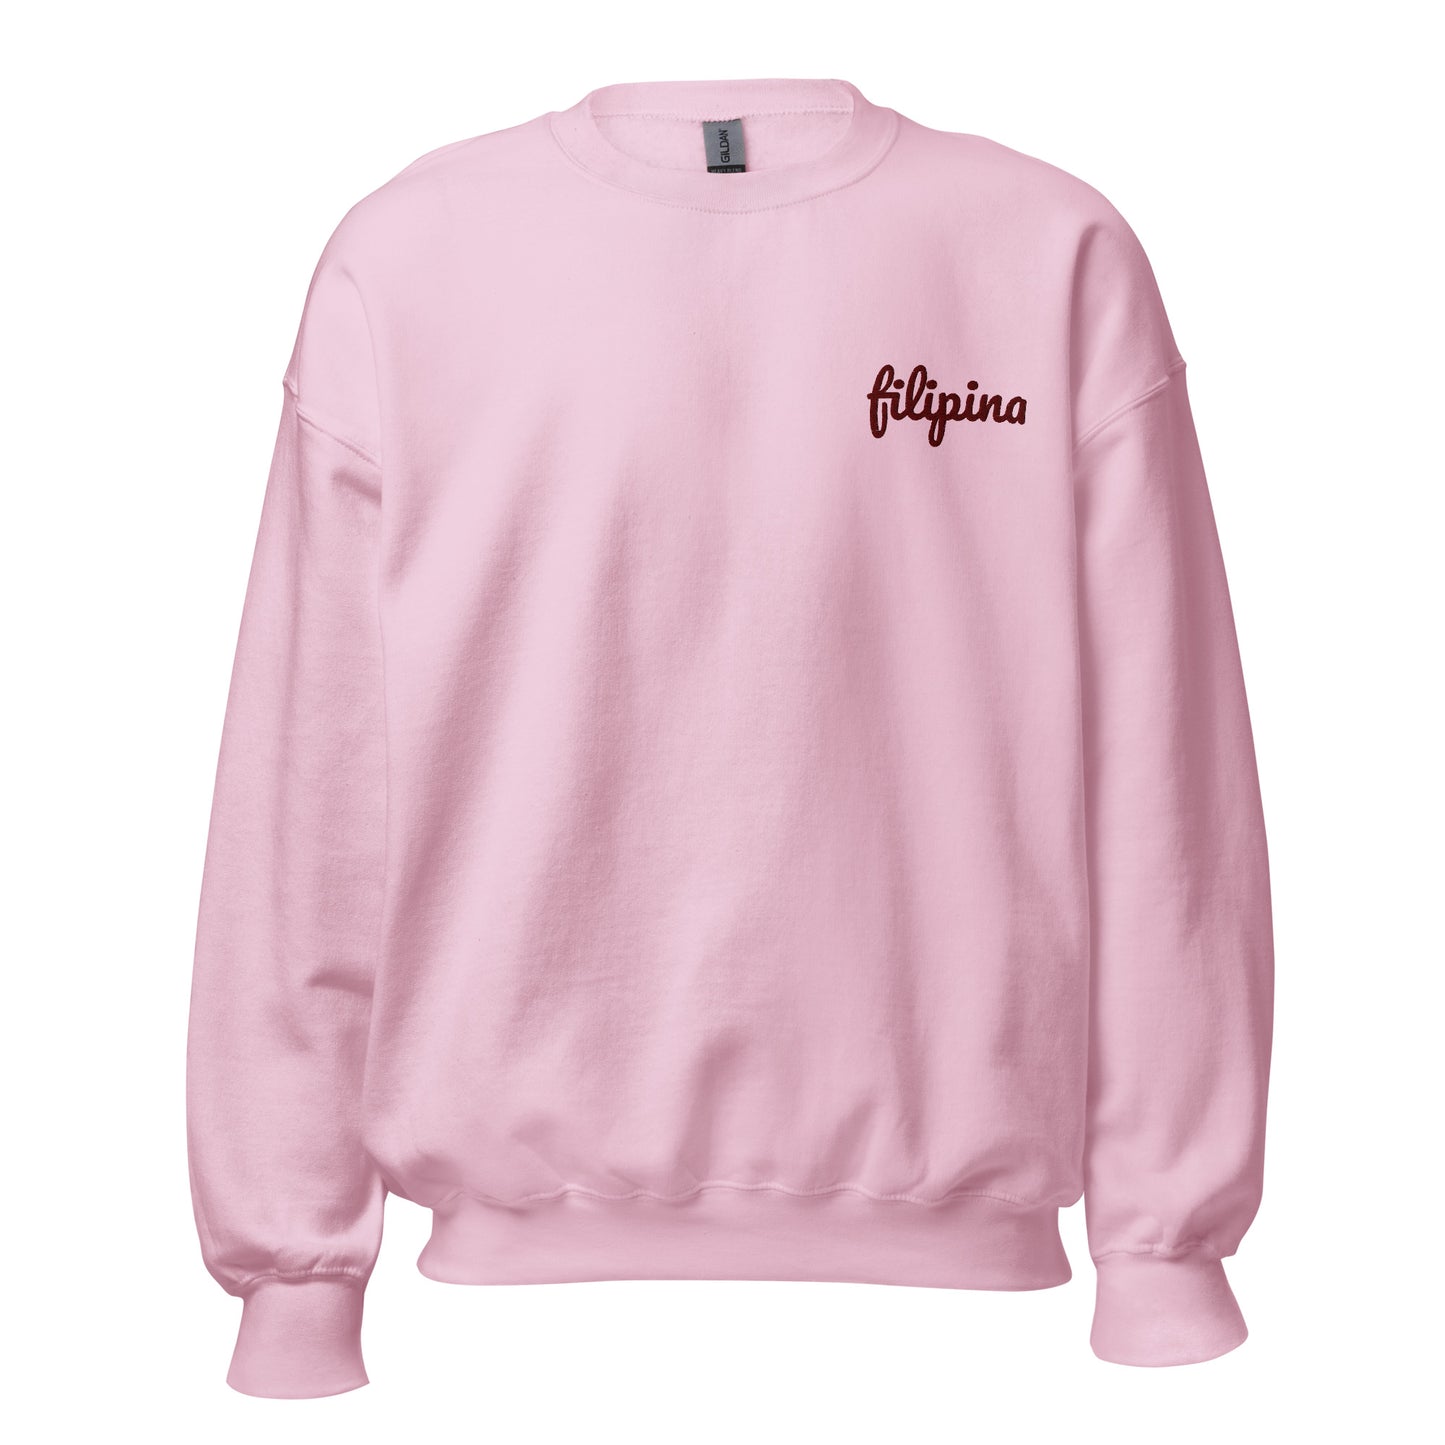 Filipino Sweatshirt Crew Neck Filipina Statement Embroidered Merch in color variant Light Pink